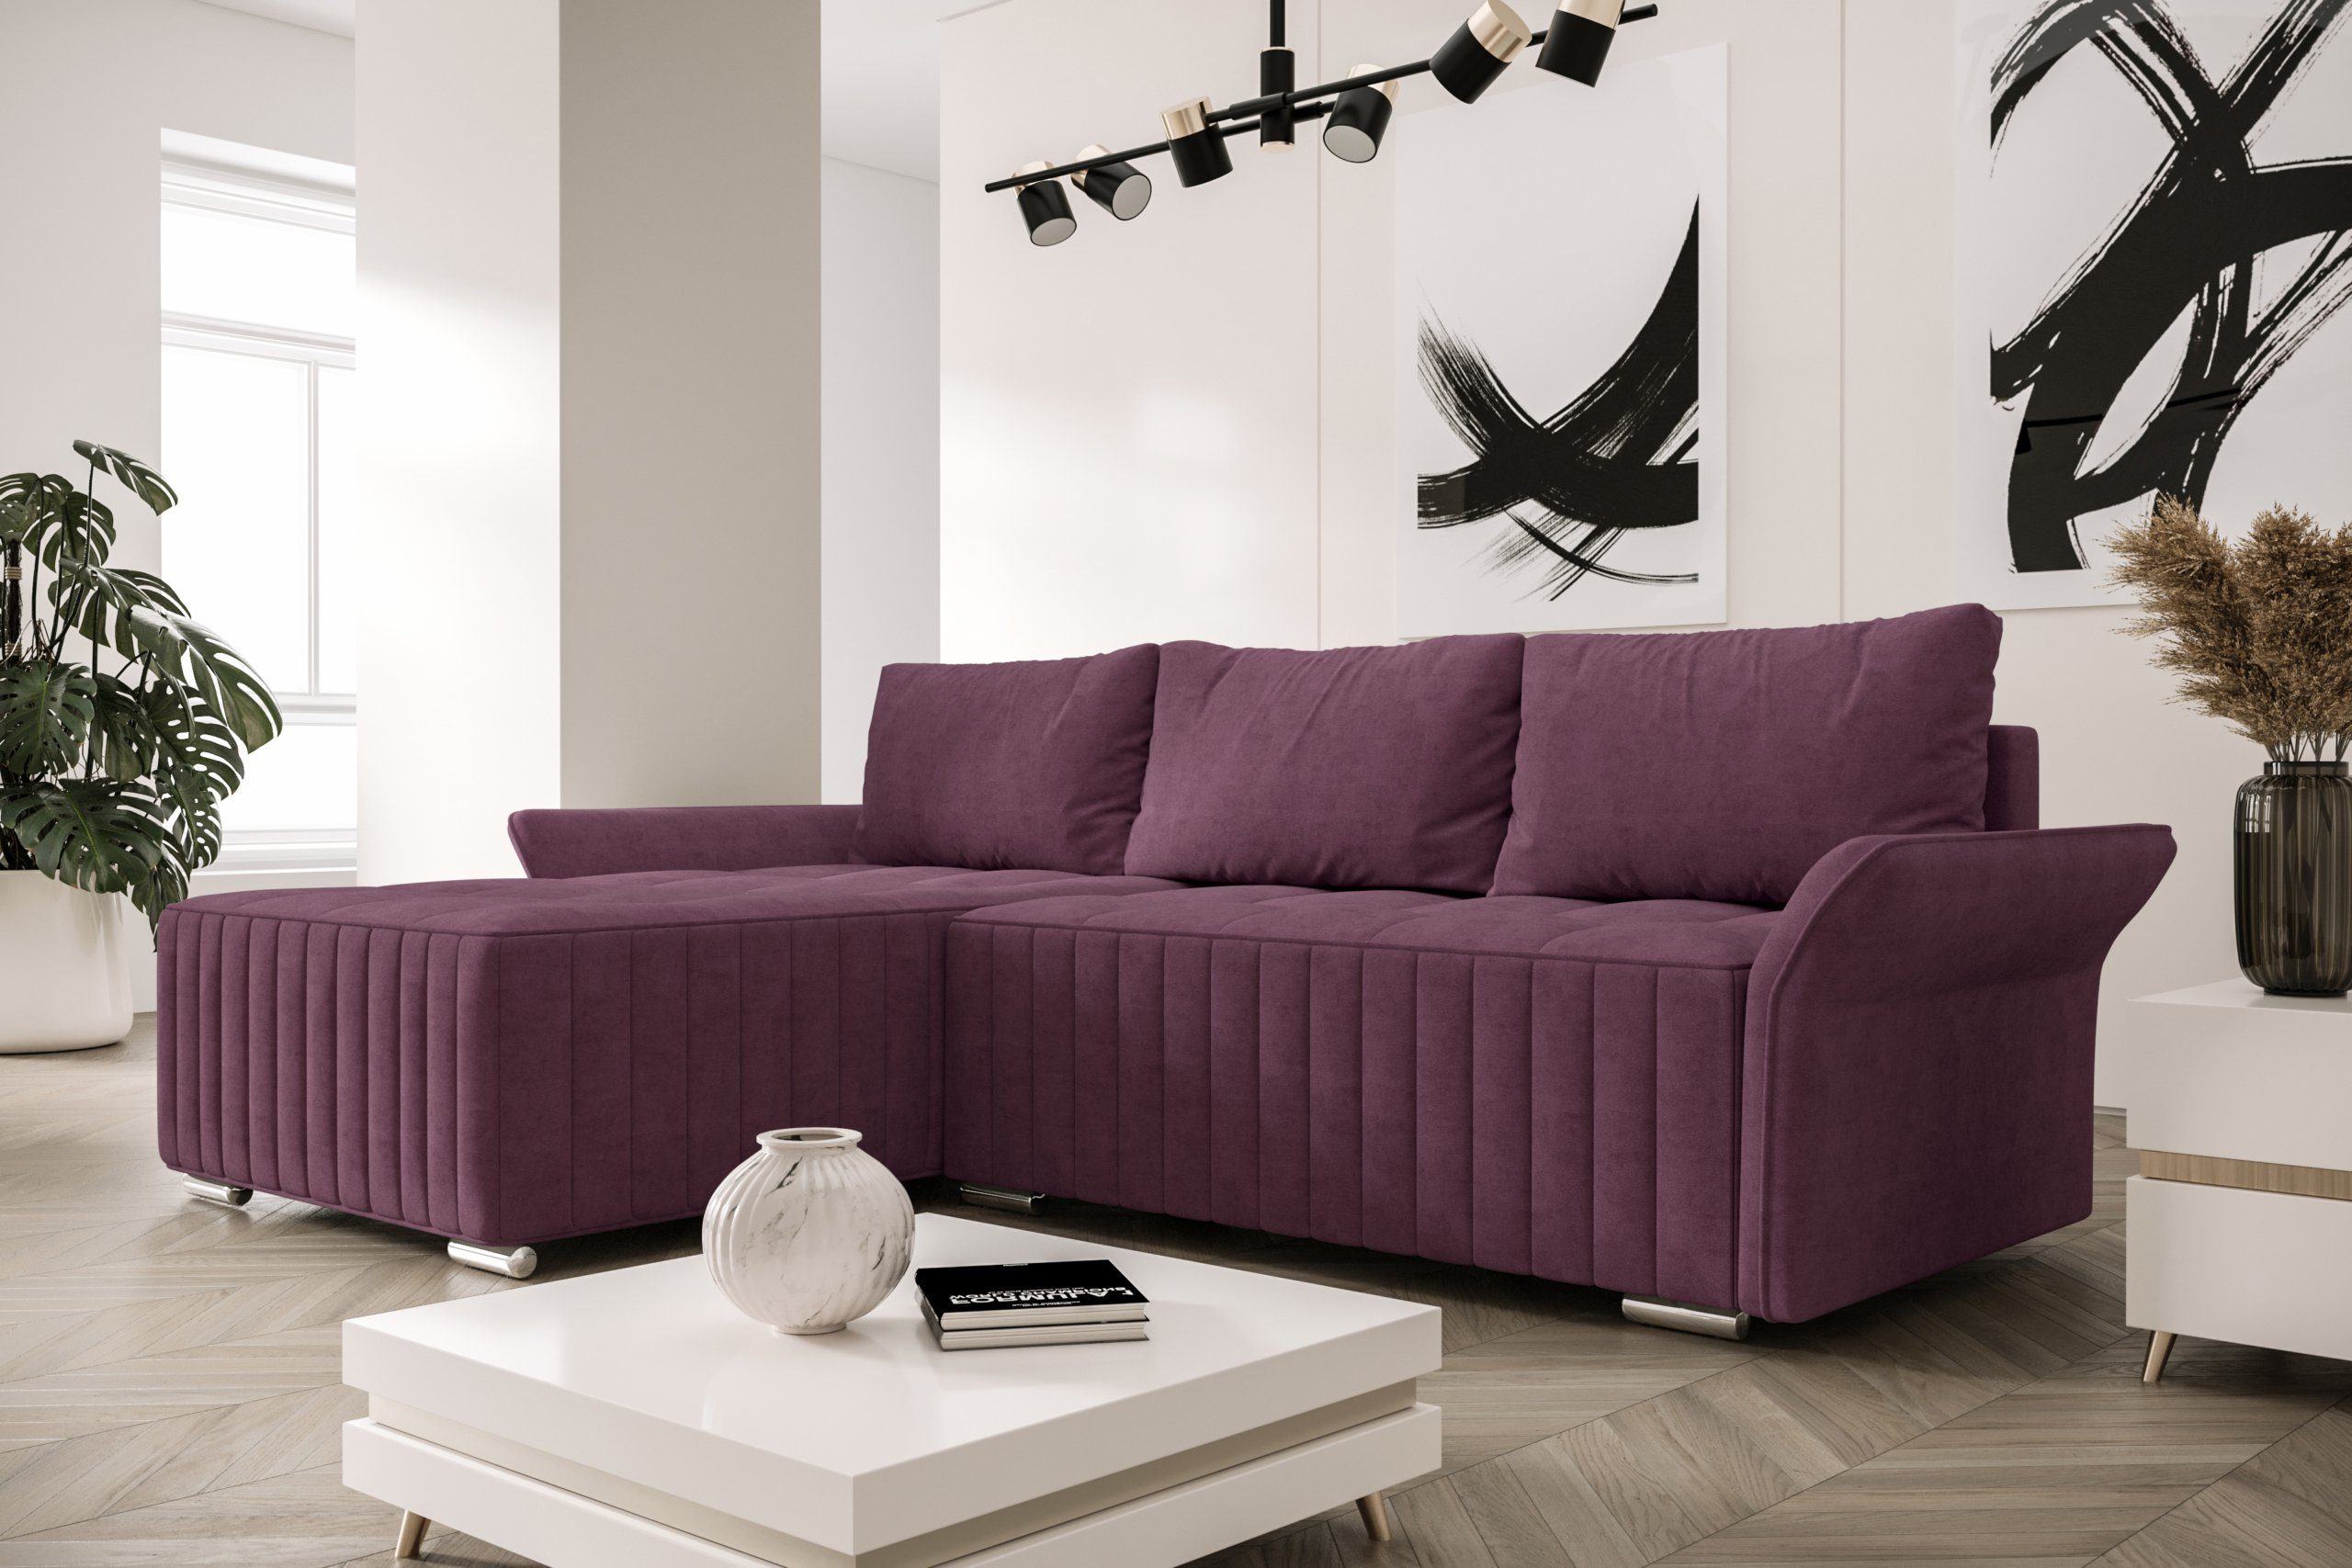 ROYAL24_MARKT Ecksofa Elegante Komfortzone Moderne Ecksofas, Flexibles Wohn-Set, Moderner Stil, Ausklapp-Automat, Rückenkissen inklusive Lavendel